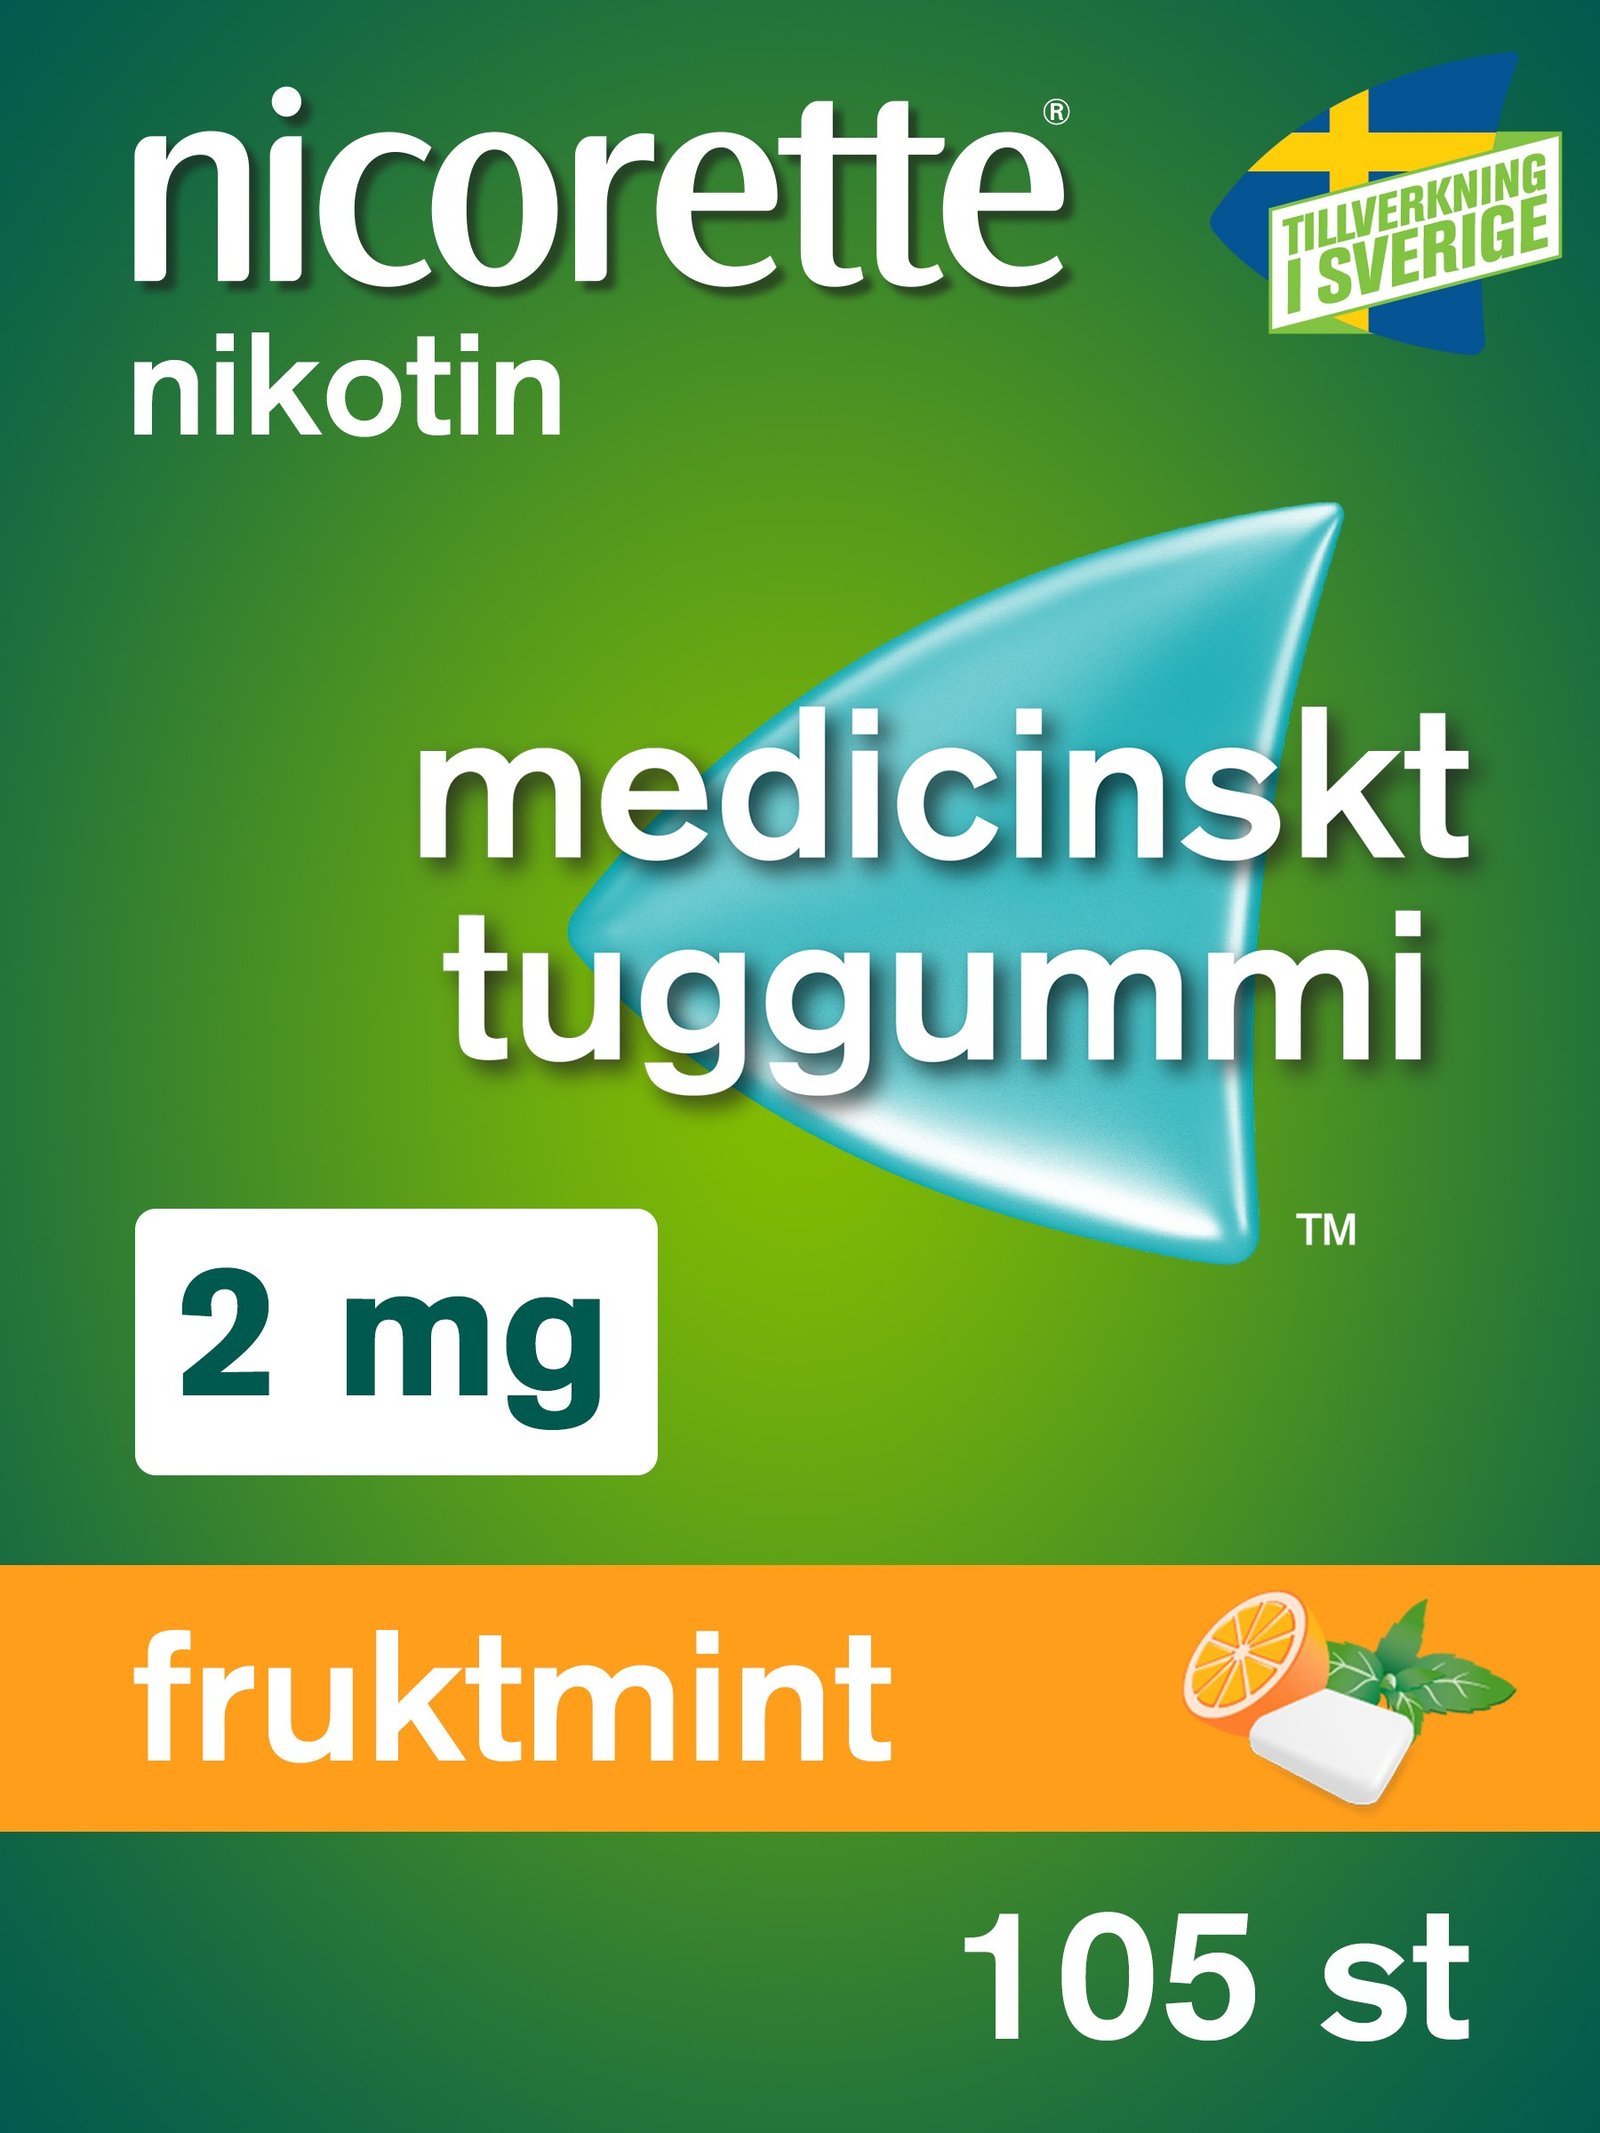 Nicorette Fruktmint Medicinskt Tuggummi 2 mg 105 st